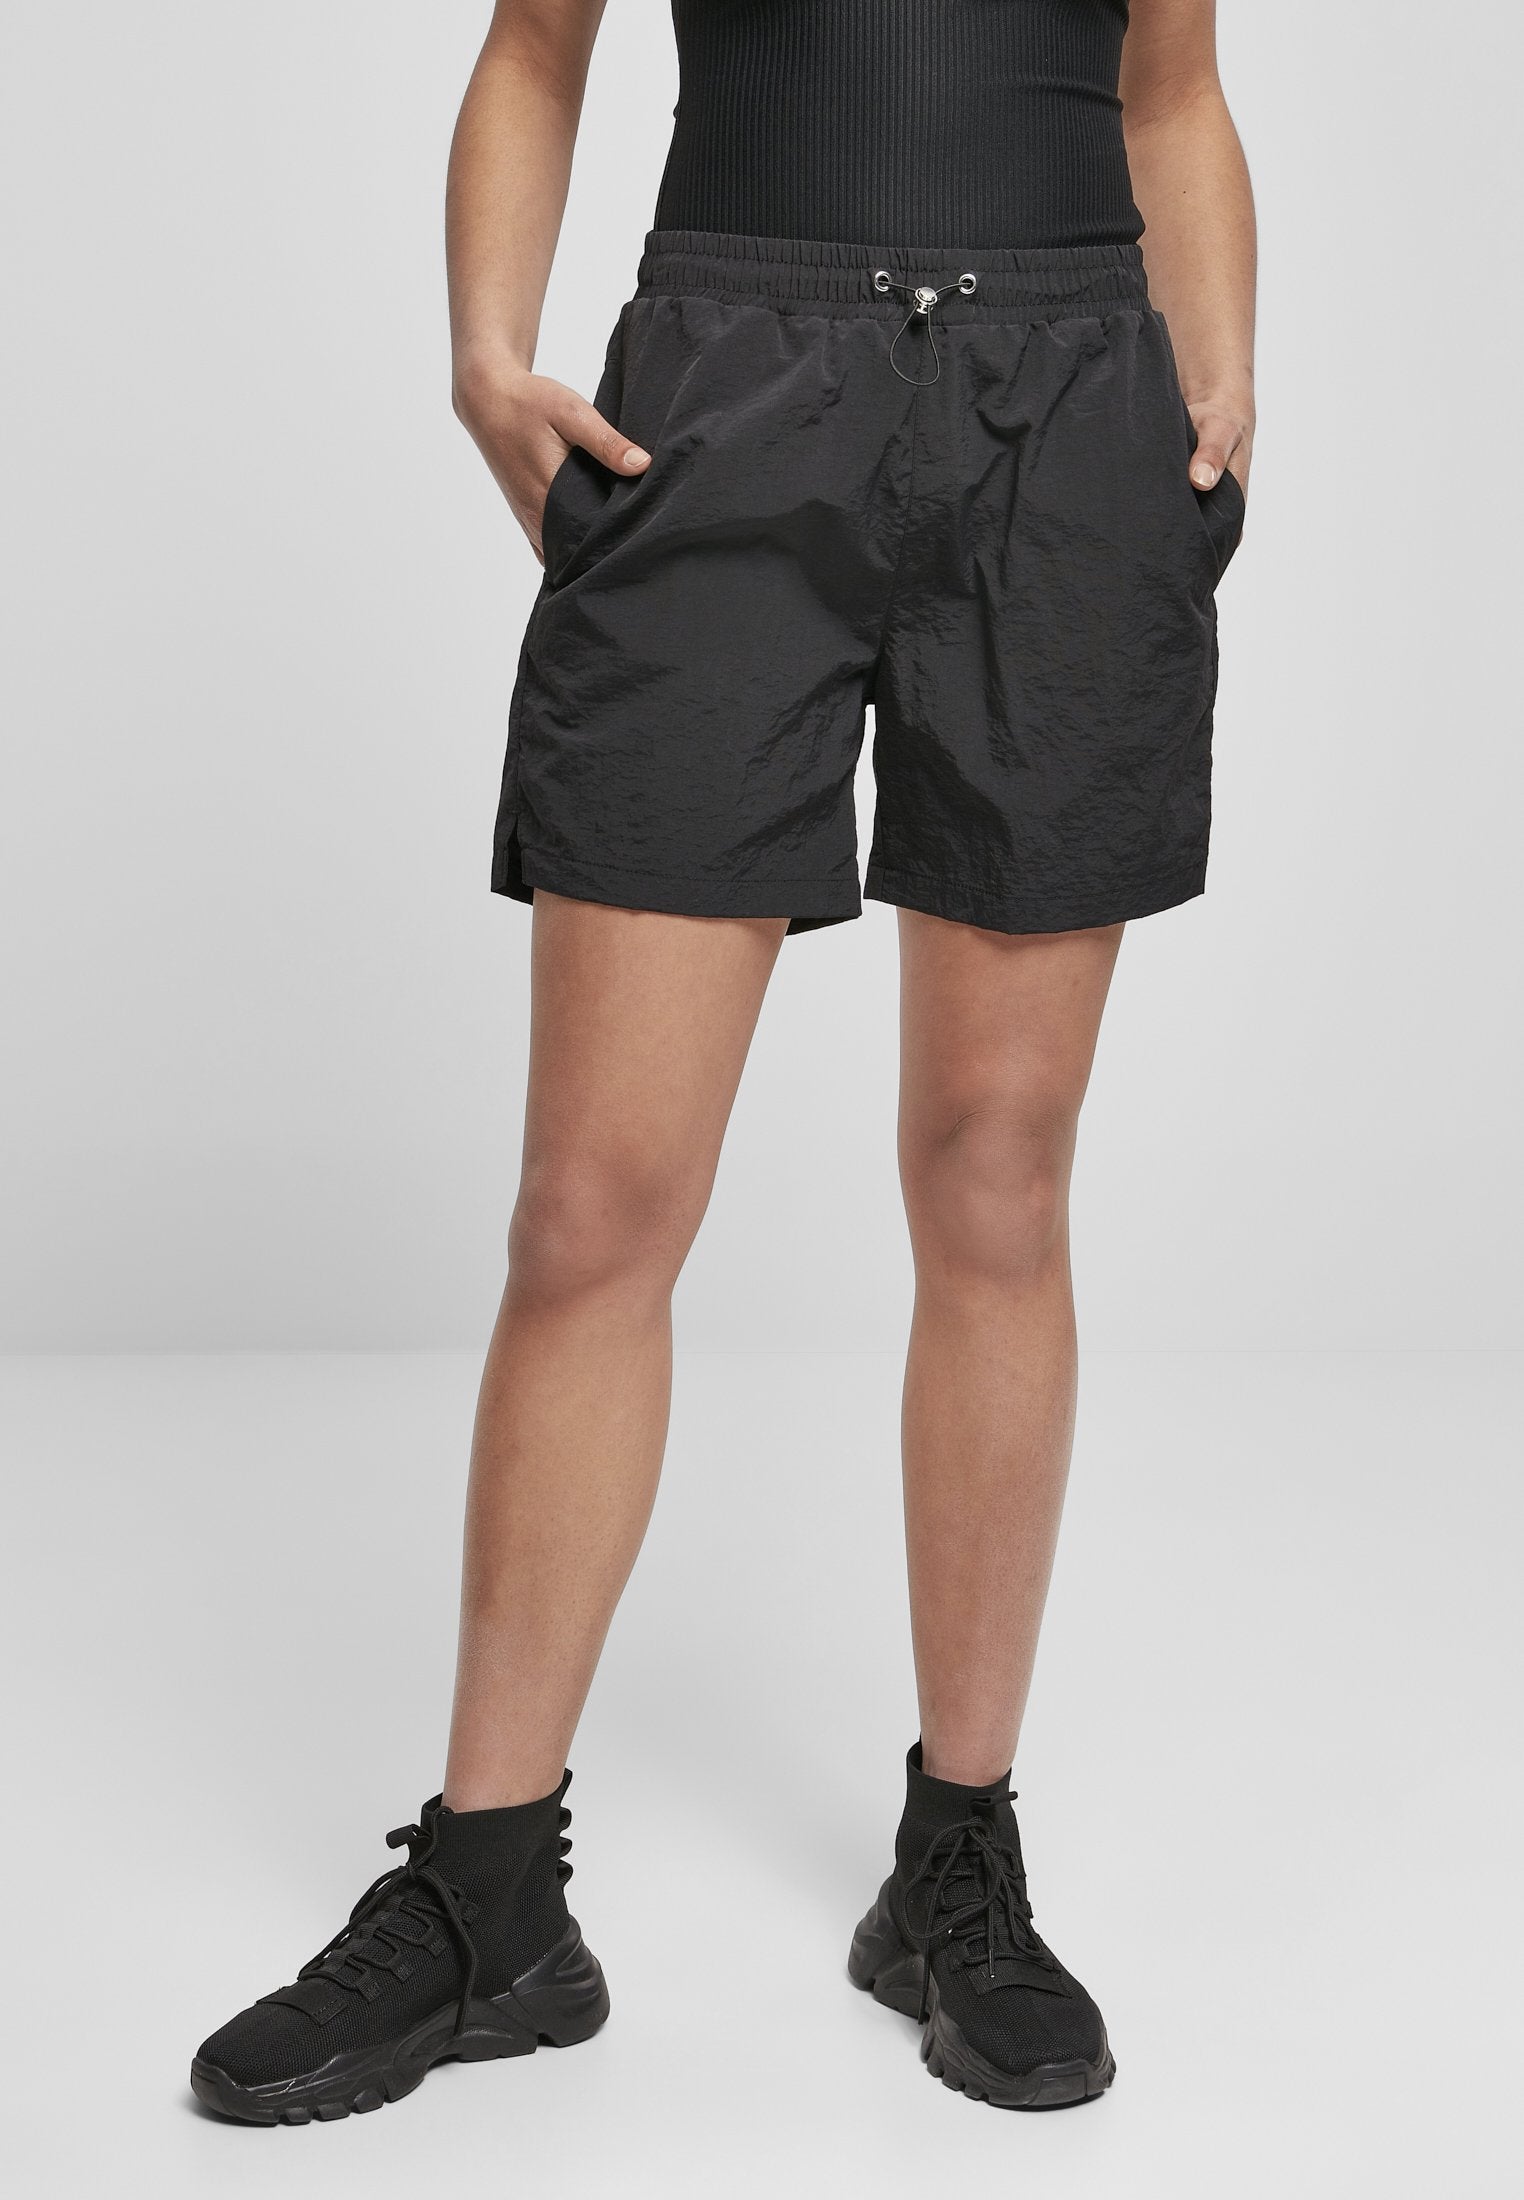 Urban Classics Damen Crinkle Nylon Shorts in Schwarz-Street-& Sportswear Aurich - Shorts